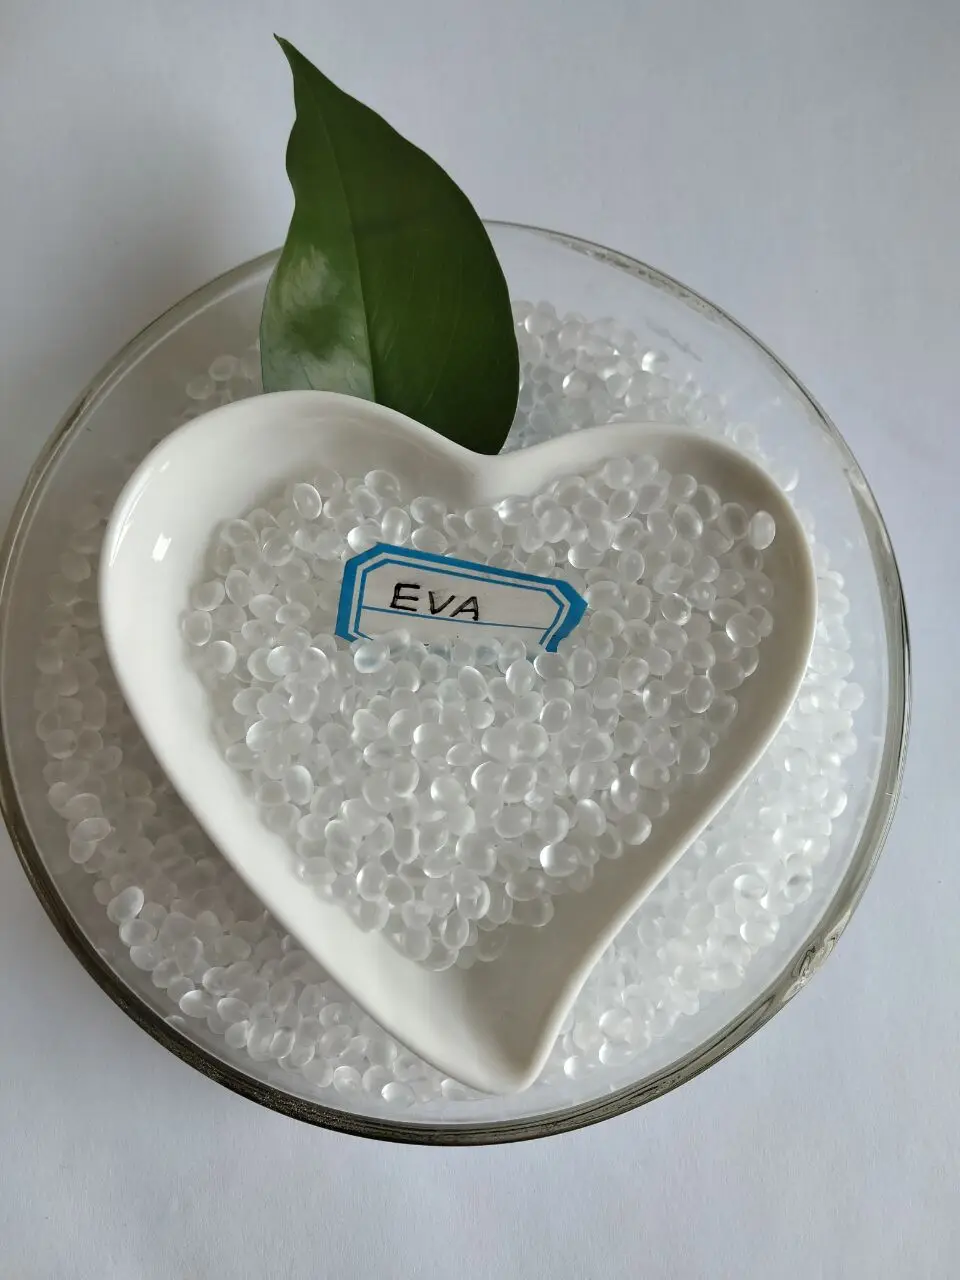 Best EVA Resin SINOPEC Ethylene Vinyl Acetate Copolymer Granules VA18% 25% 28% EVA